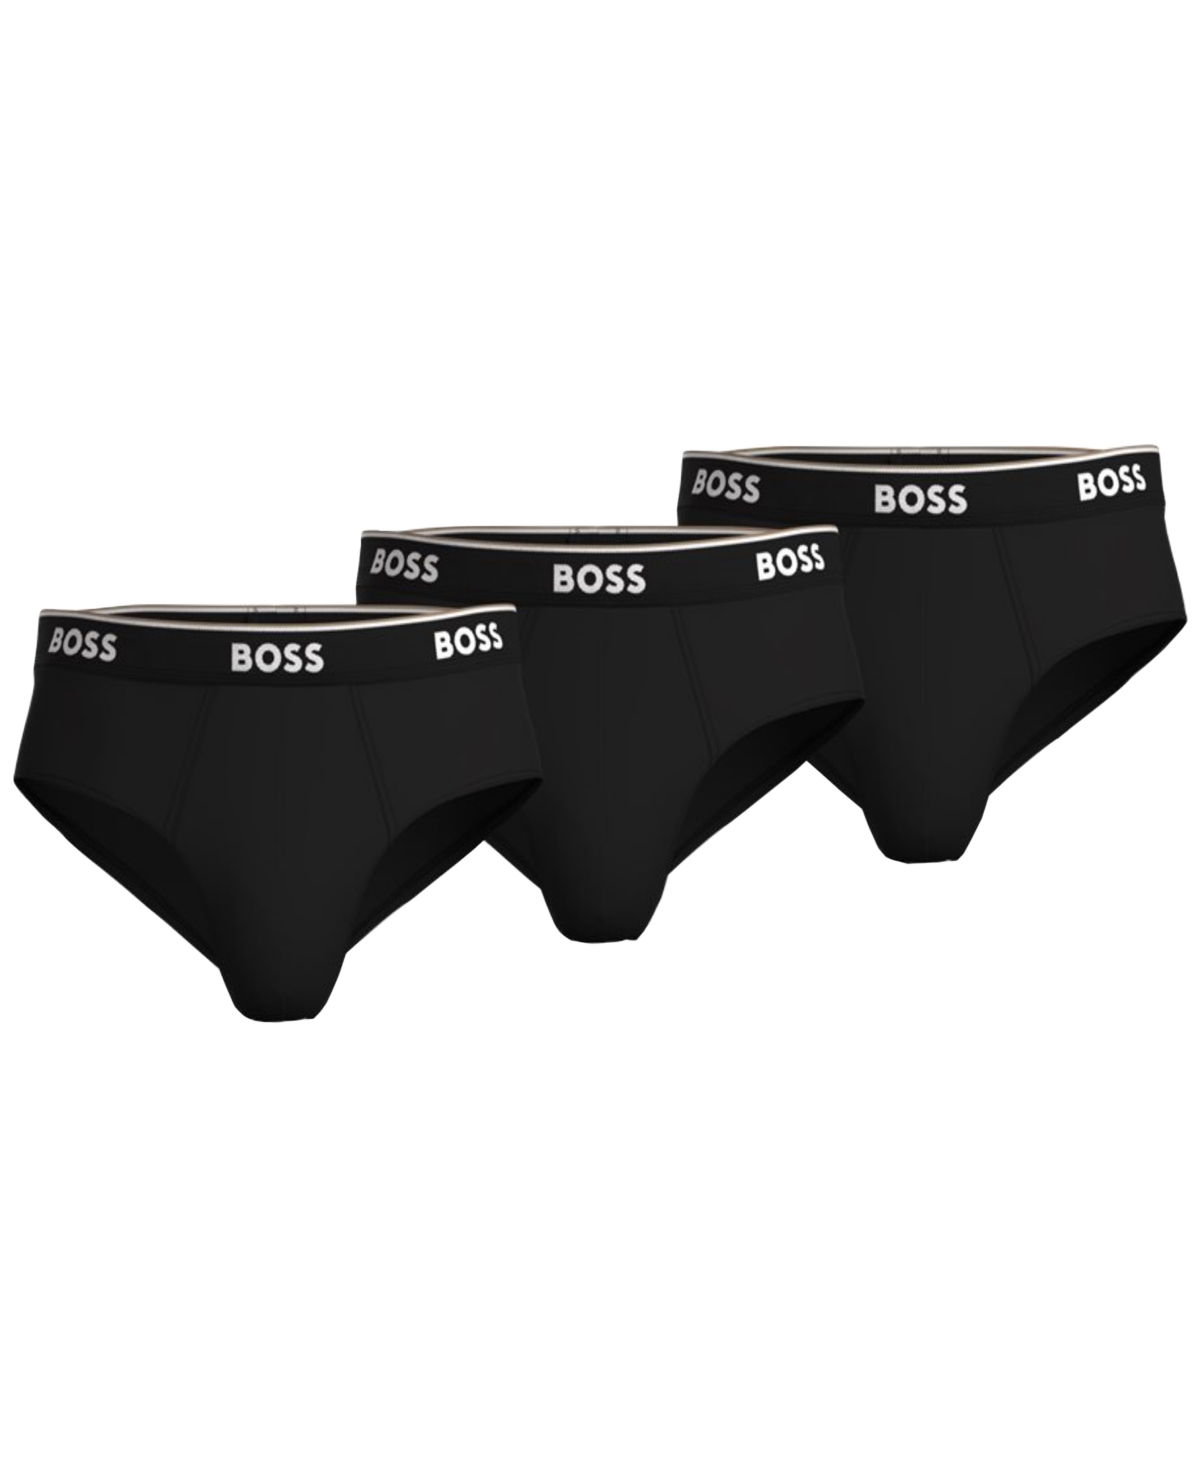 Boss Men's 3-Pk. Solid Power Briefs - Black